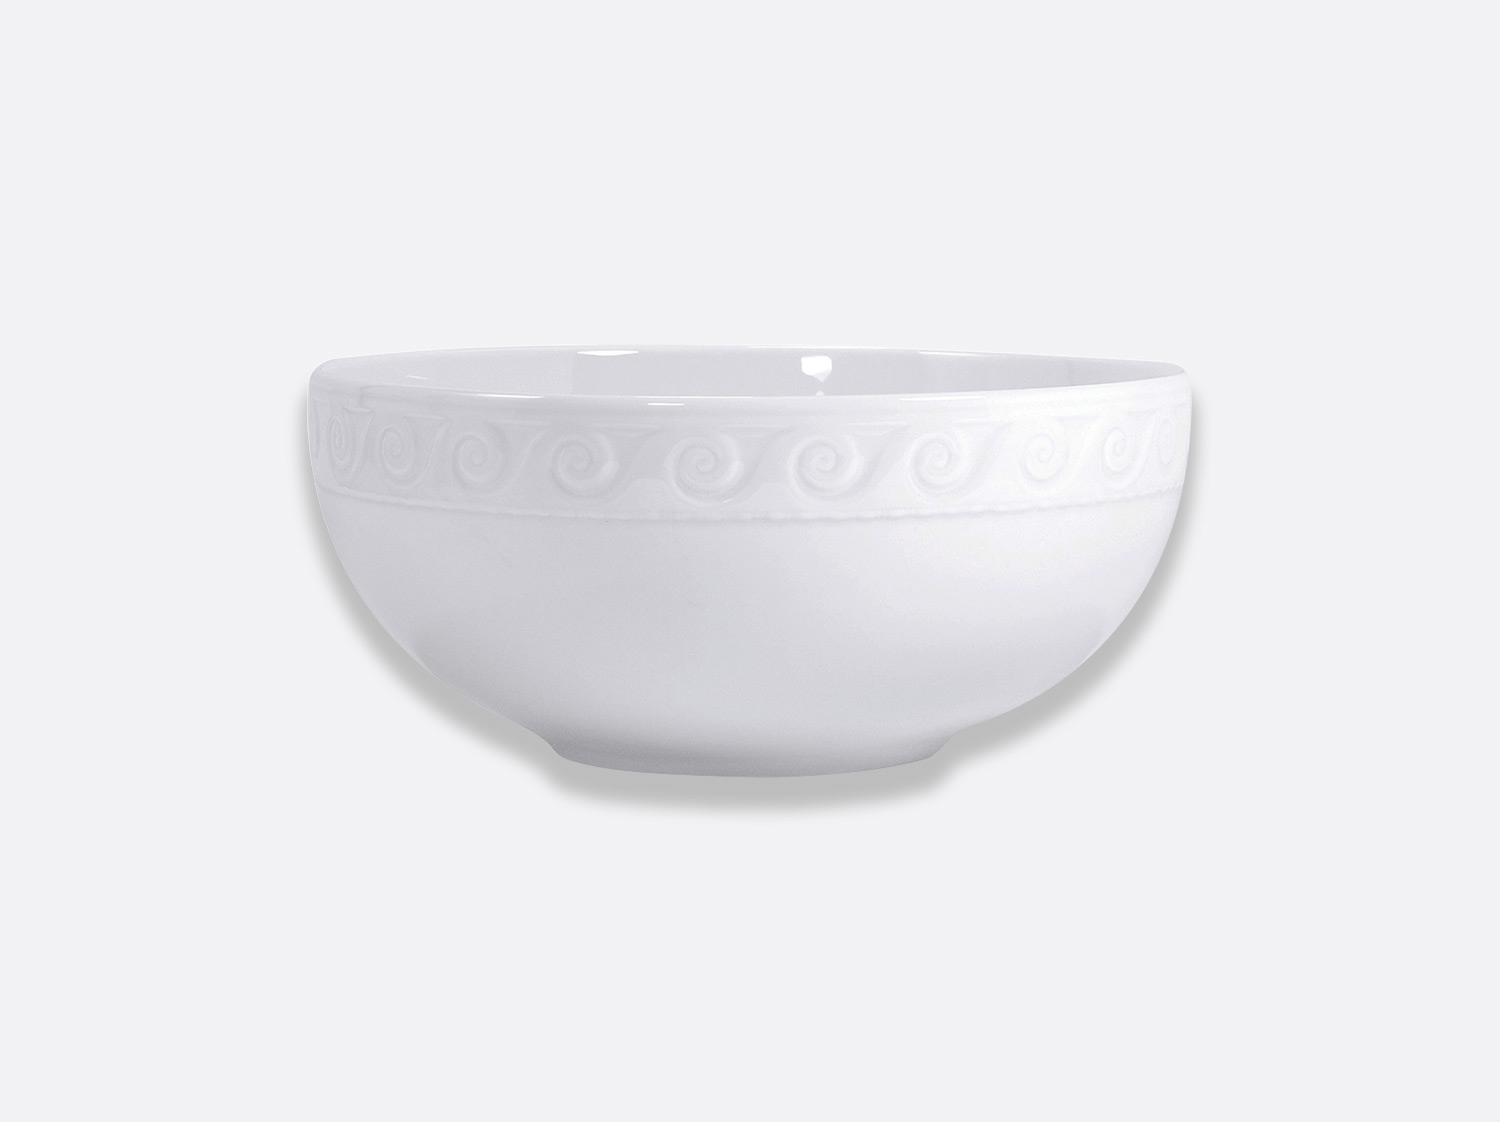 Tetera Timm, ceramica 1L - Brouwhoeve & Partners